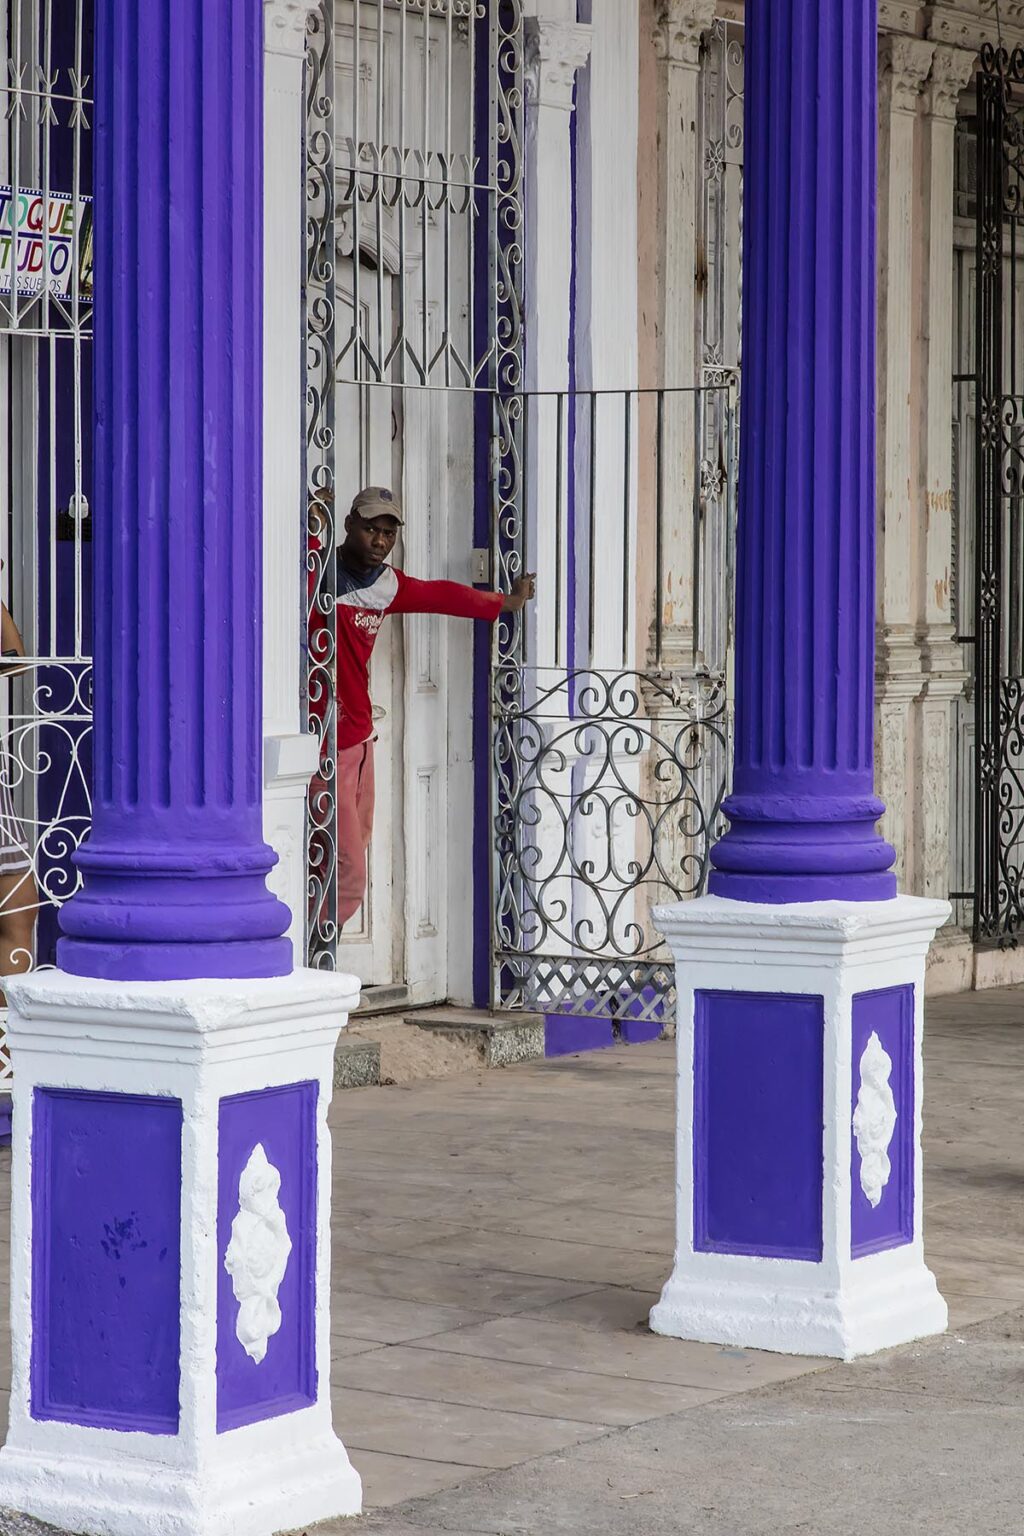 A shop owner between purple pillars - CIENFUEGOS, CUBA